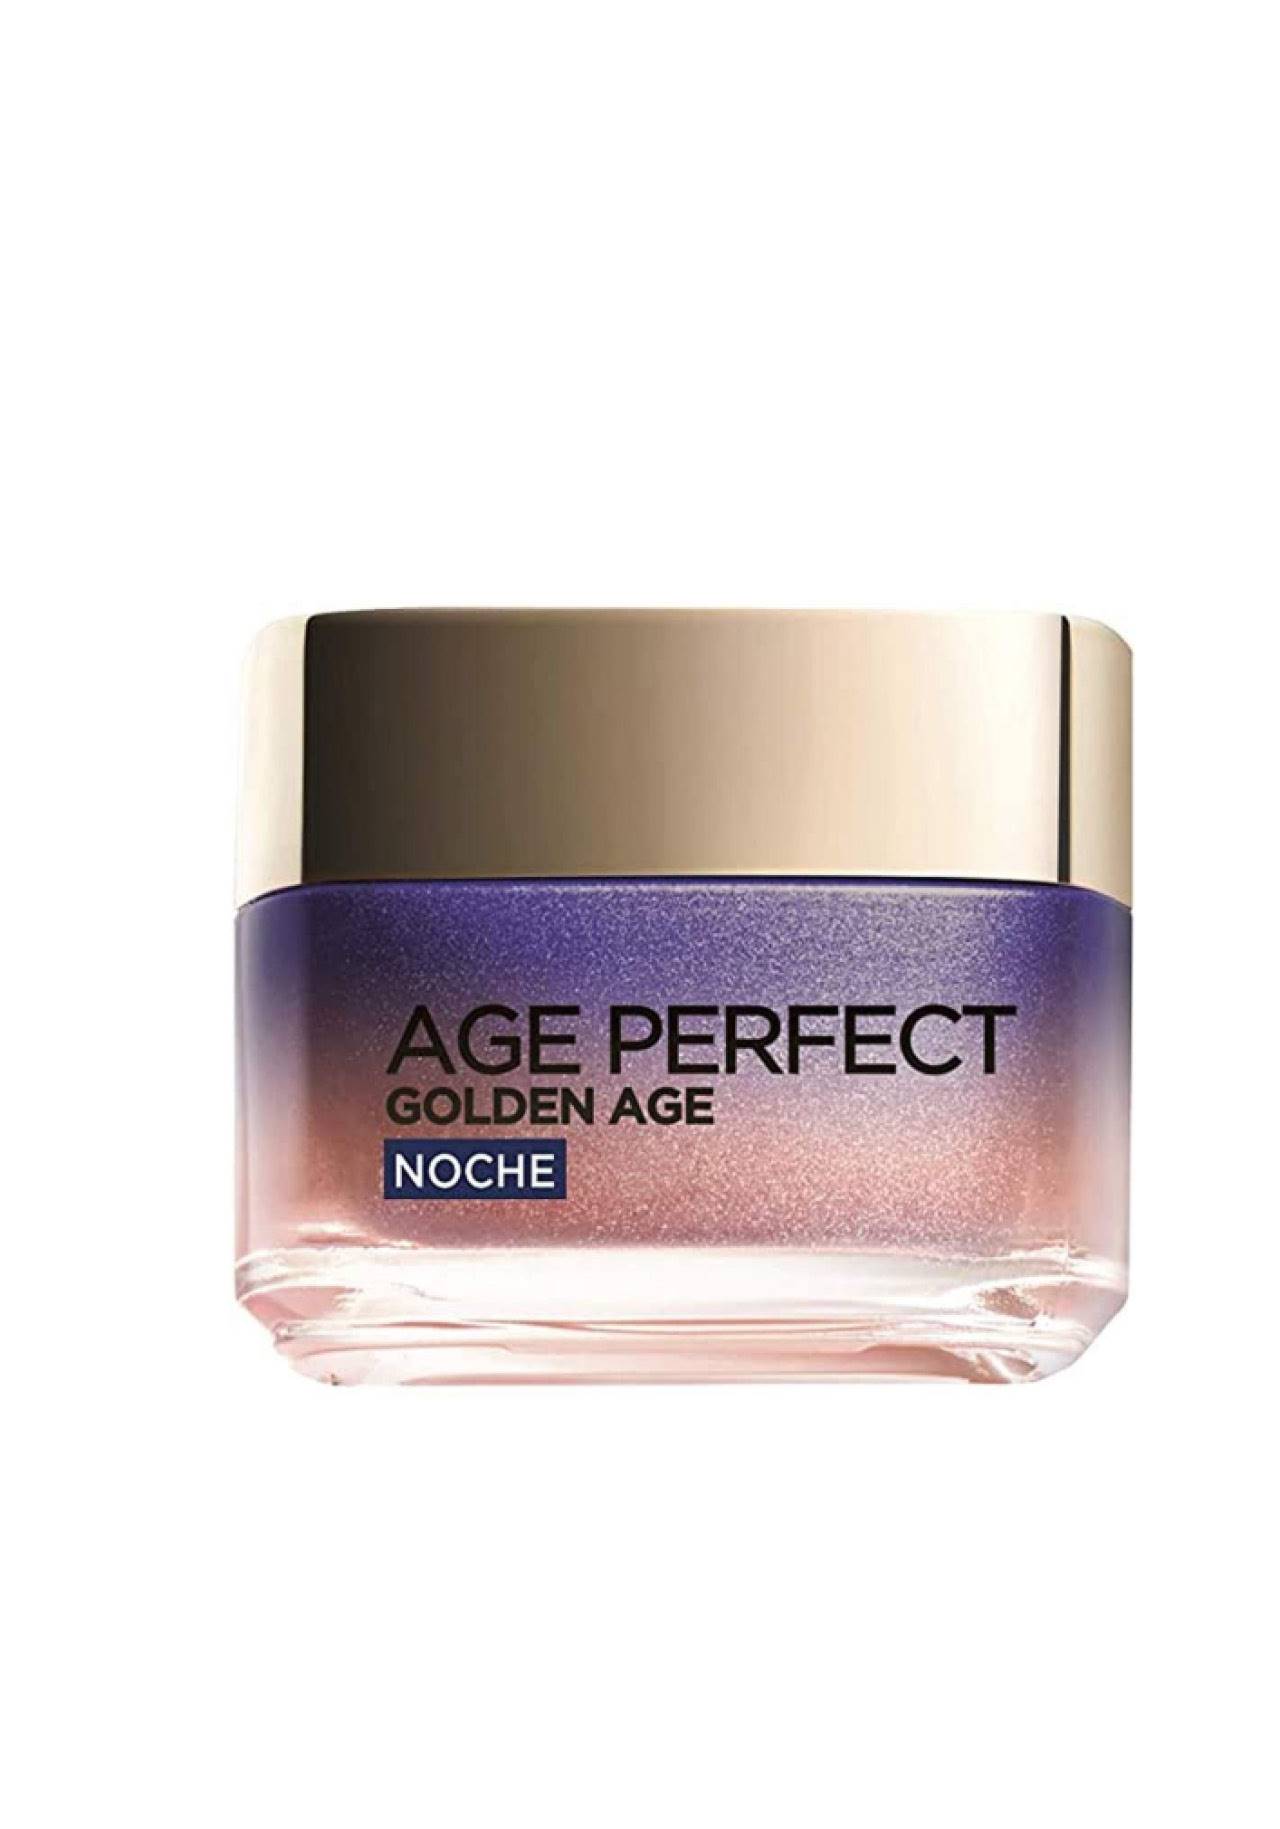 Cosmetica iluminadora Age Perfect Golden Age Noche de L’Oréal Paris,